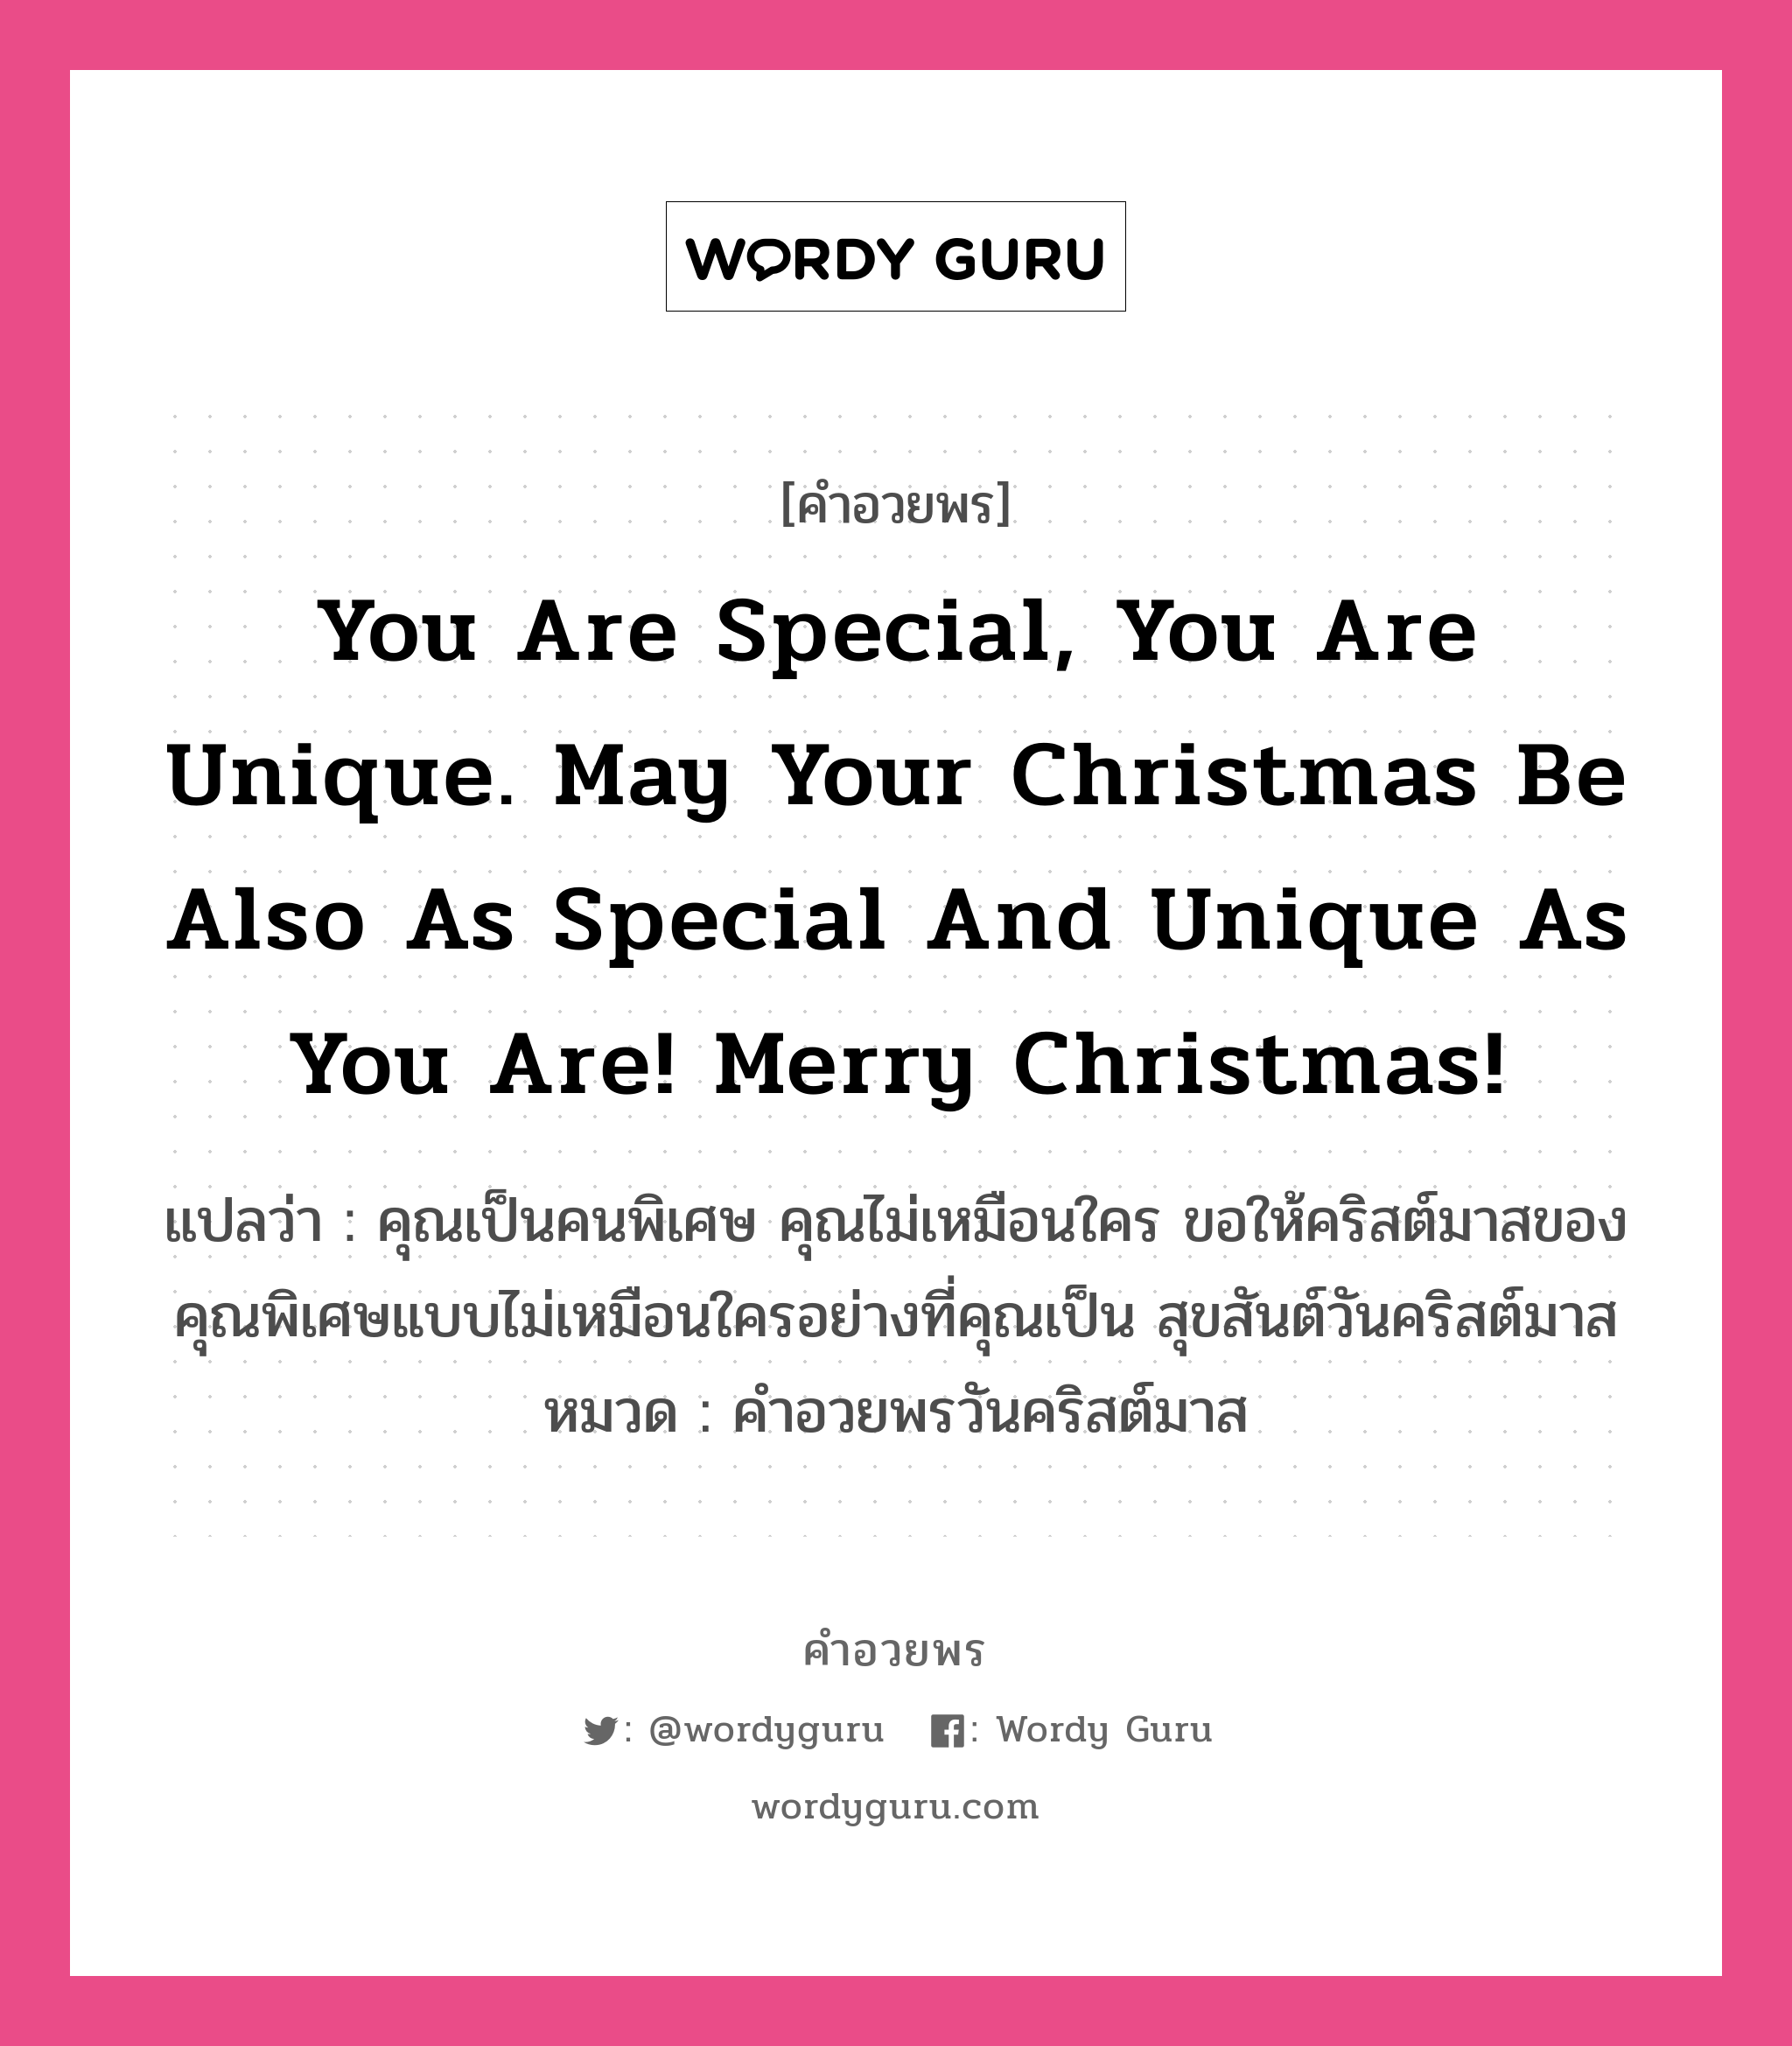 You are special, you are unique. May your Christmas be also as special and unique as you are! Merry Christmas! คำศัพท์ในกลุ่มประเภท คำอวยพรวันคริสต์มาส, แปลว่า คุณเป็นคนพิเศษ คุณไม่เหมือนใคร ขอให้คริสต์มาสของคุณพิเศษแบบไม่เหมือนใครอย่างที่คุณเป็น สุขสันต์วันคริสต์มาส หมวด คำอวยพรวันคริสต์มาส หมวด คำอวยพรวันคริสต์มาส